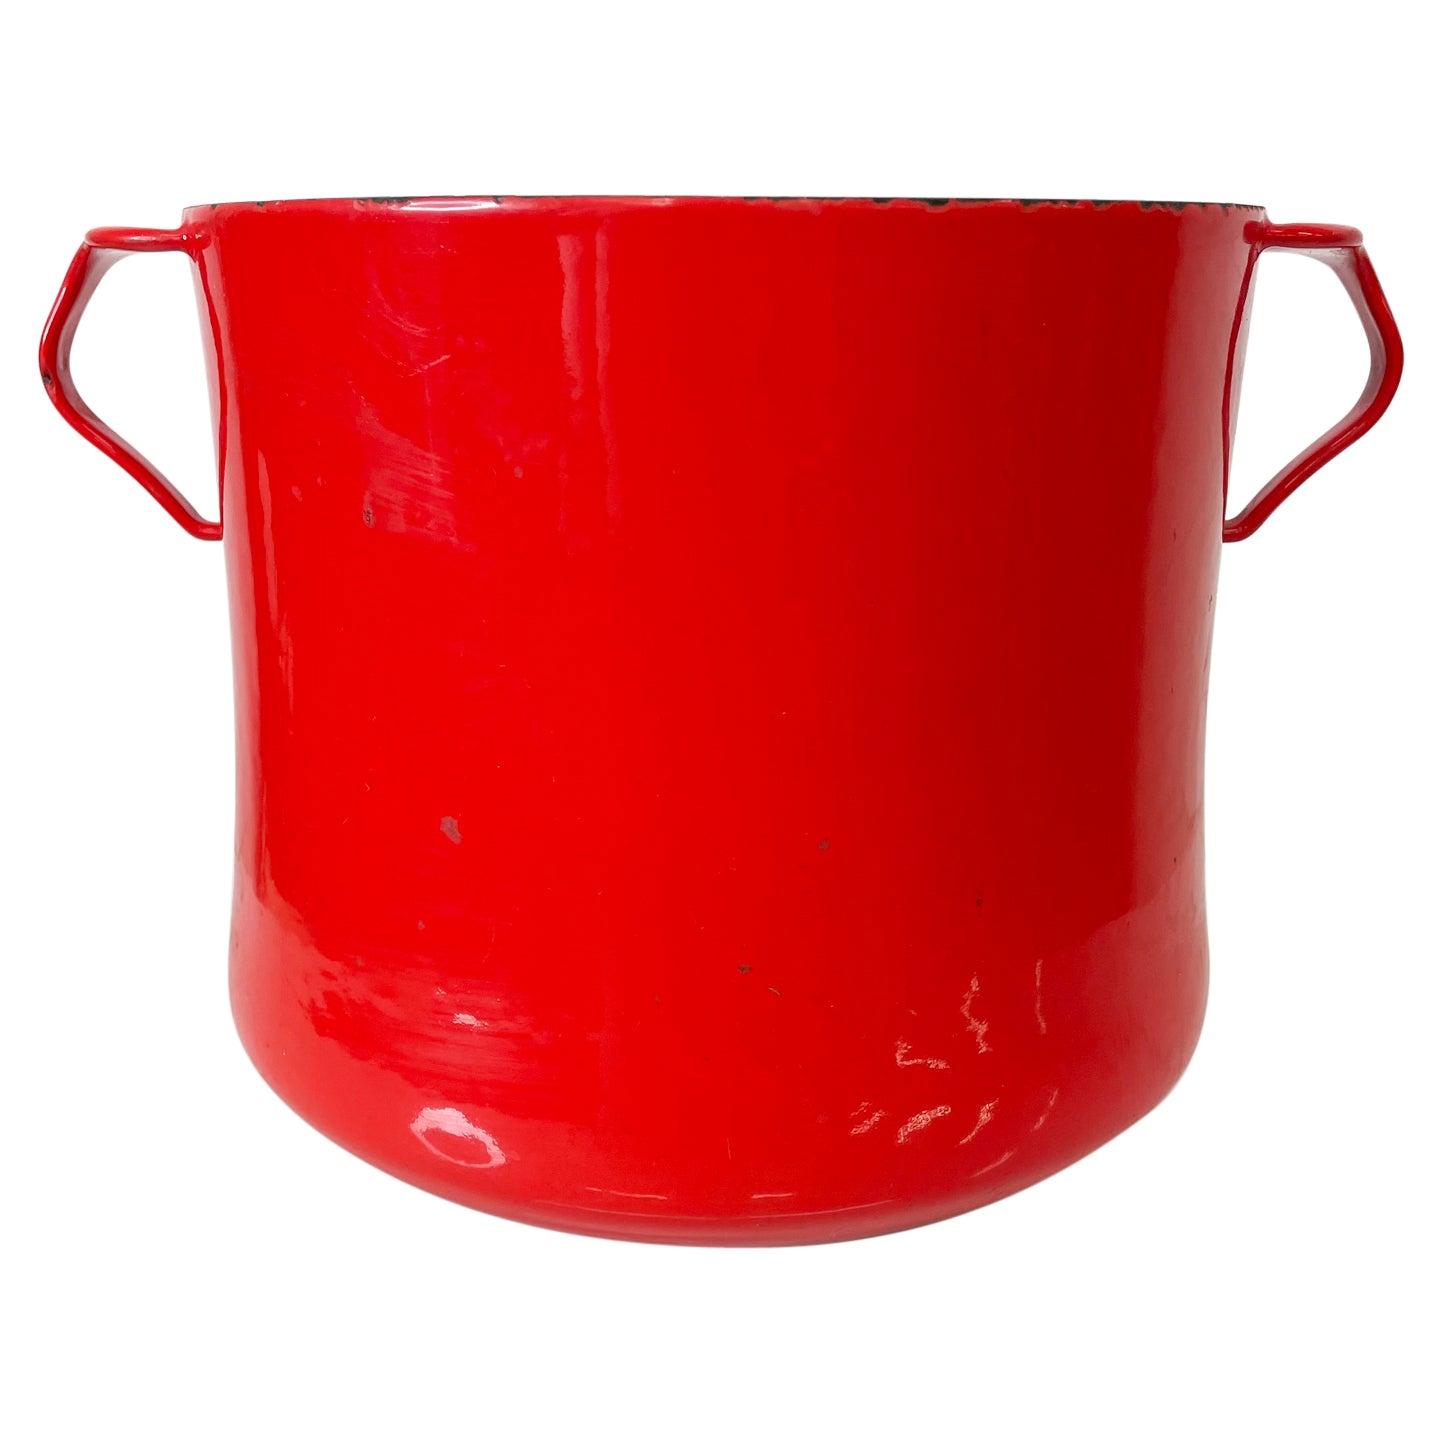 Dansk International Designs Red Enamel Dutch Oven Casserole Pot IHQ France